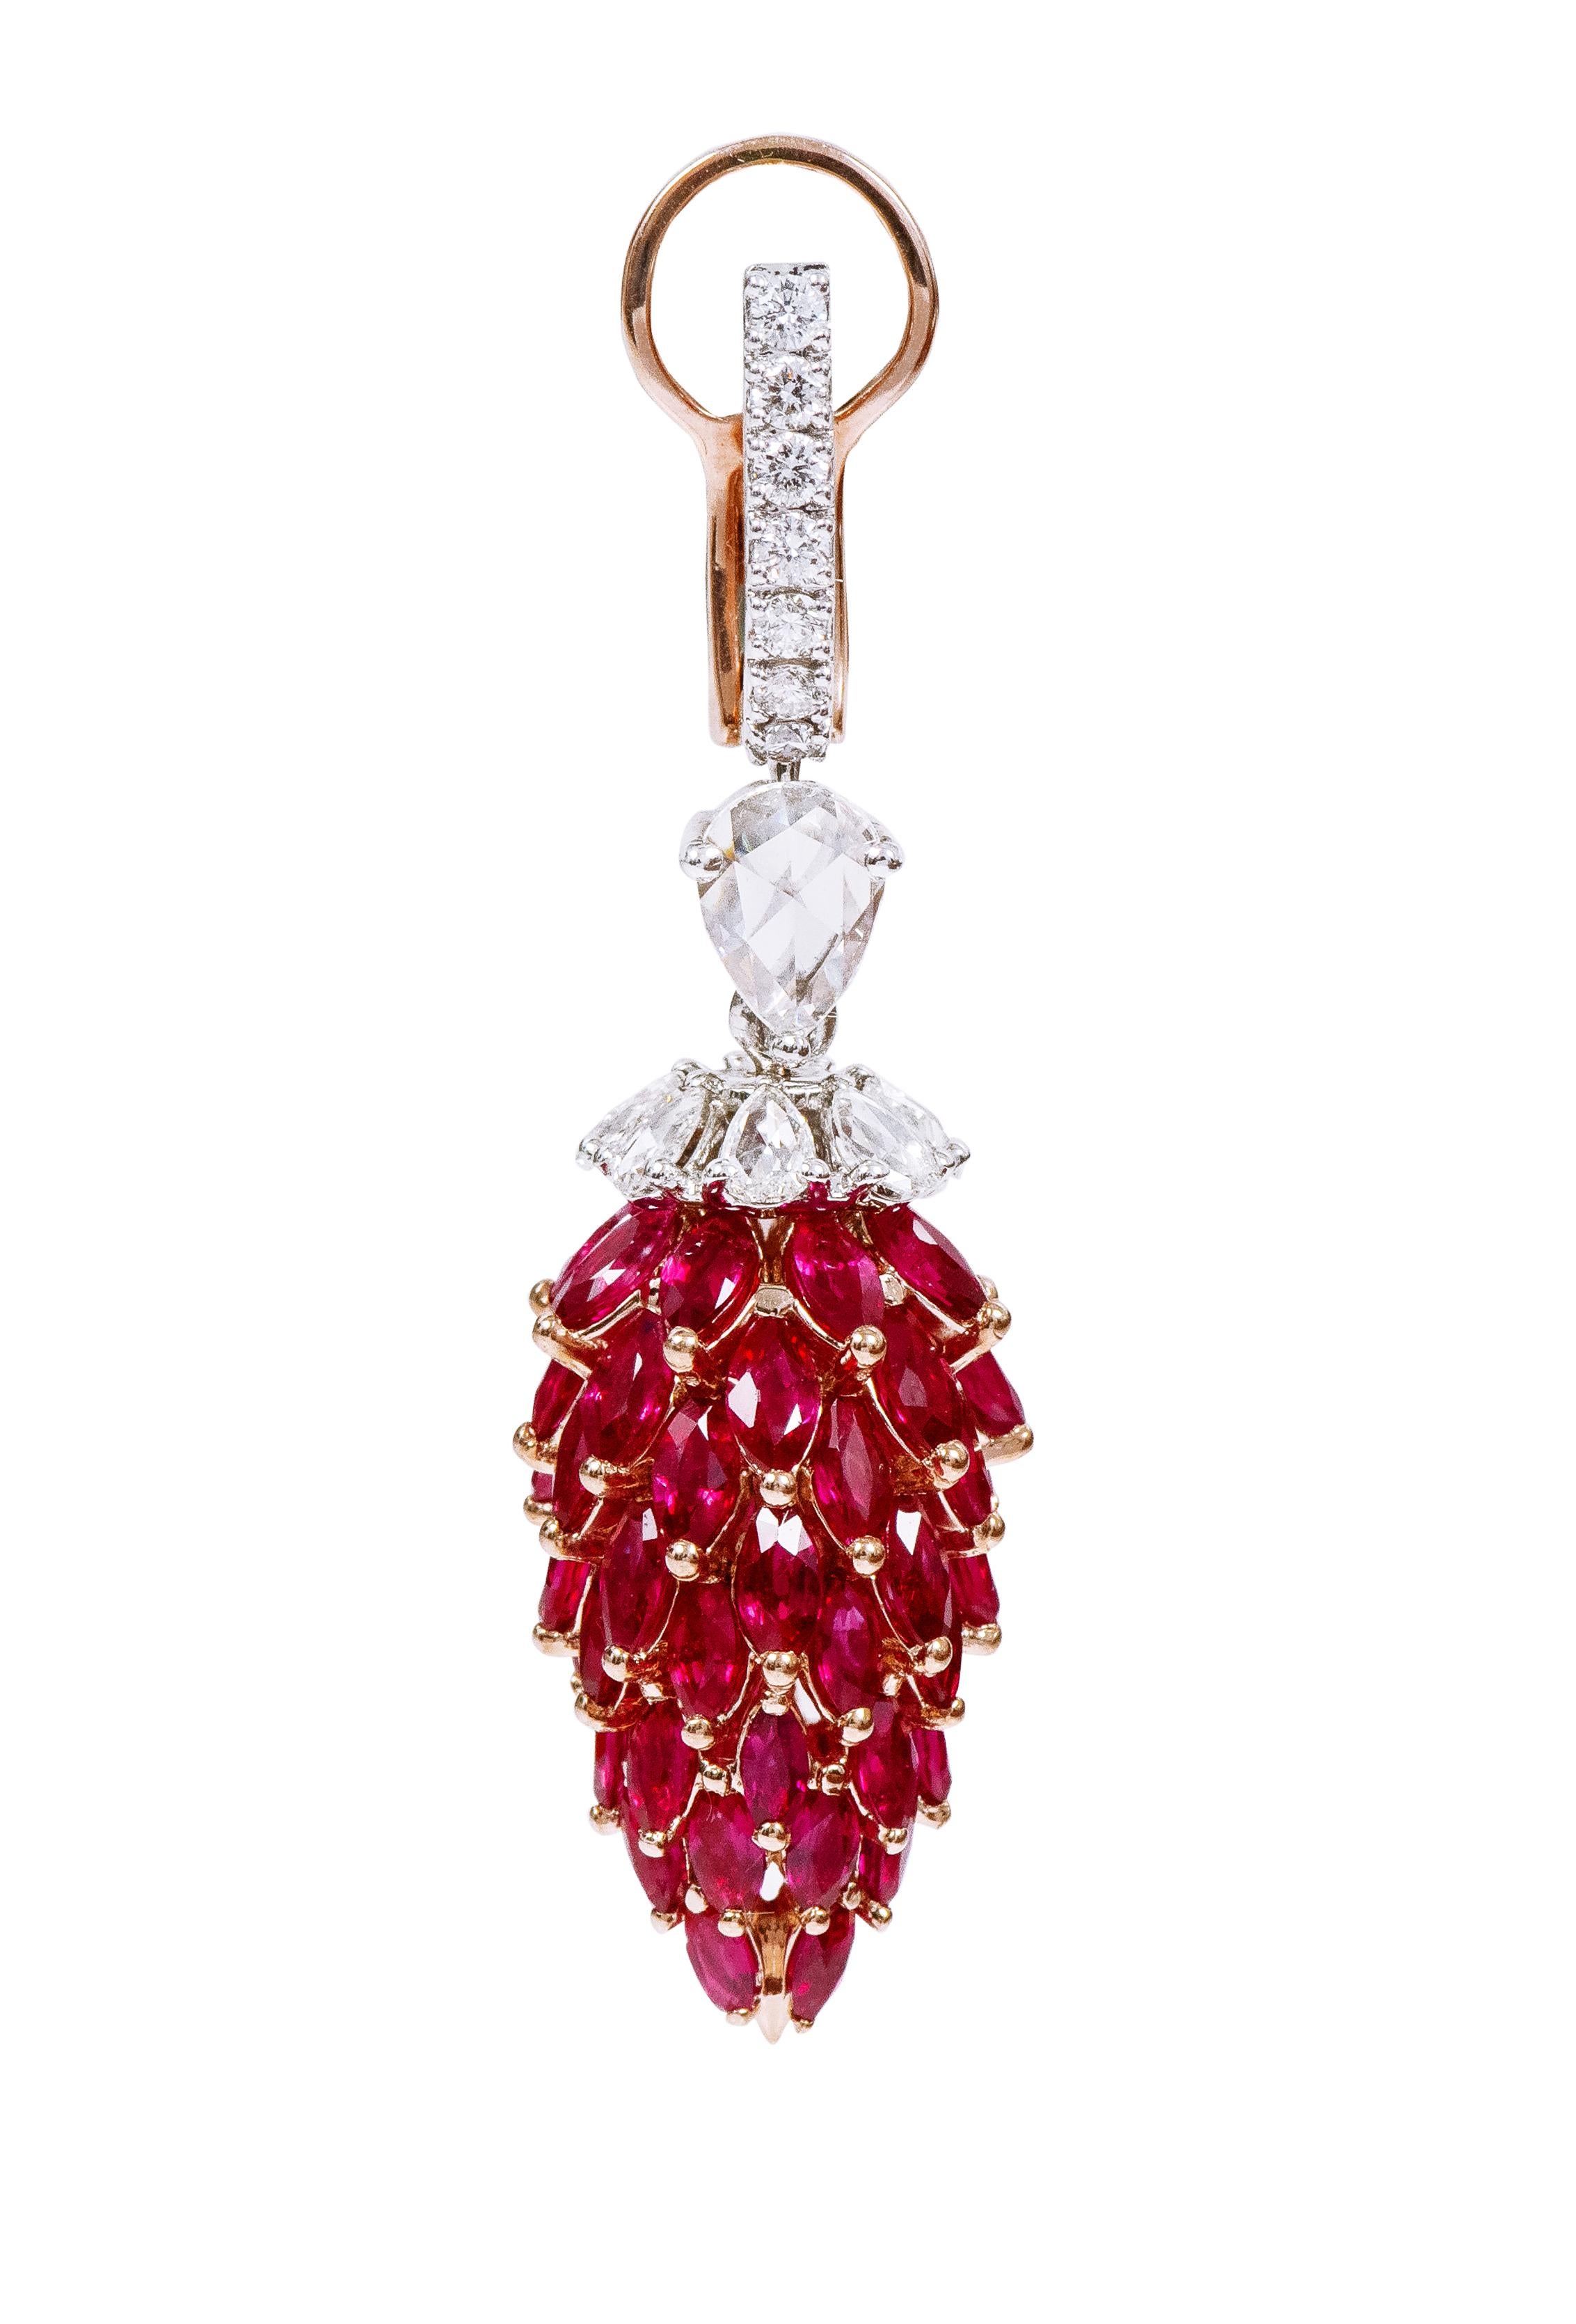 18 Karat Gold 16.77 Carat Pigeon-Blood Ruby and Diamond Drop Earrings For Sale 1